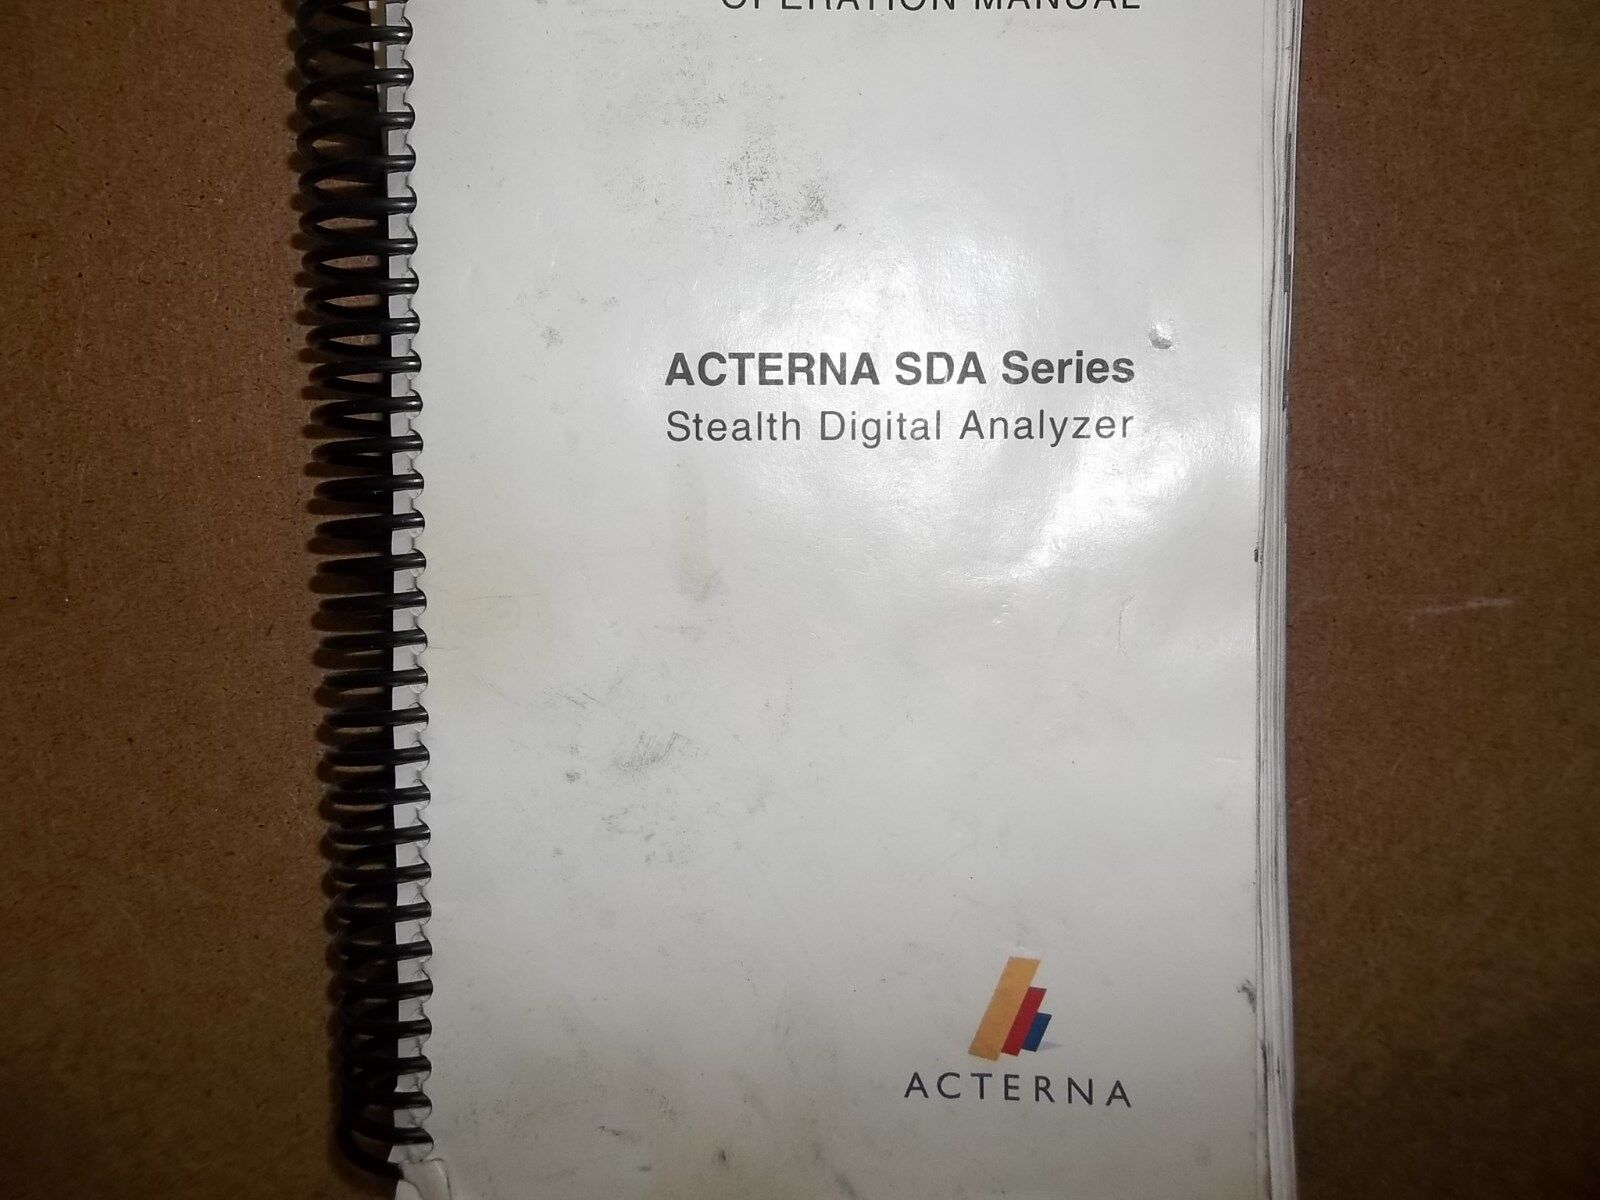 Acterna Manual SDA Series Stealth Digital Analyzer Operaterion Manual book 